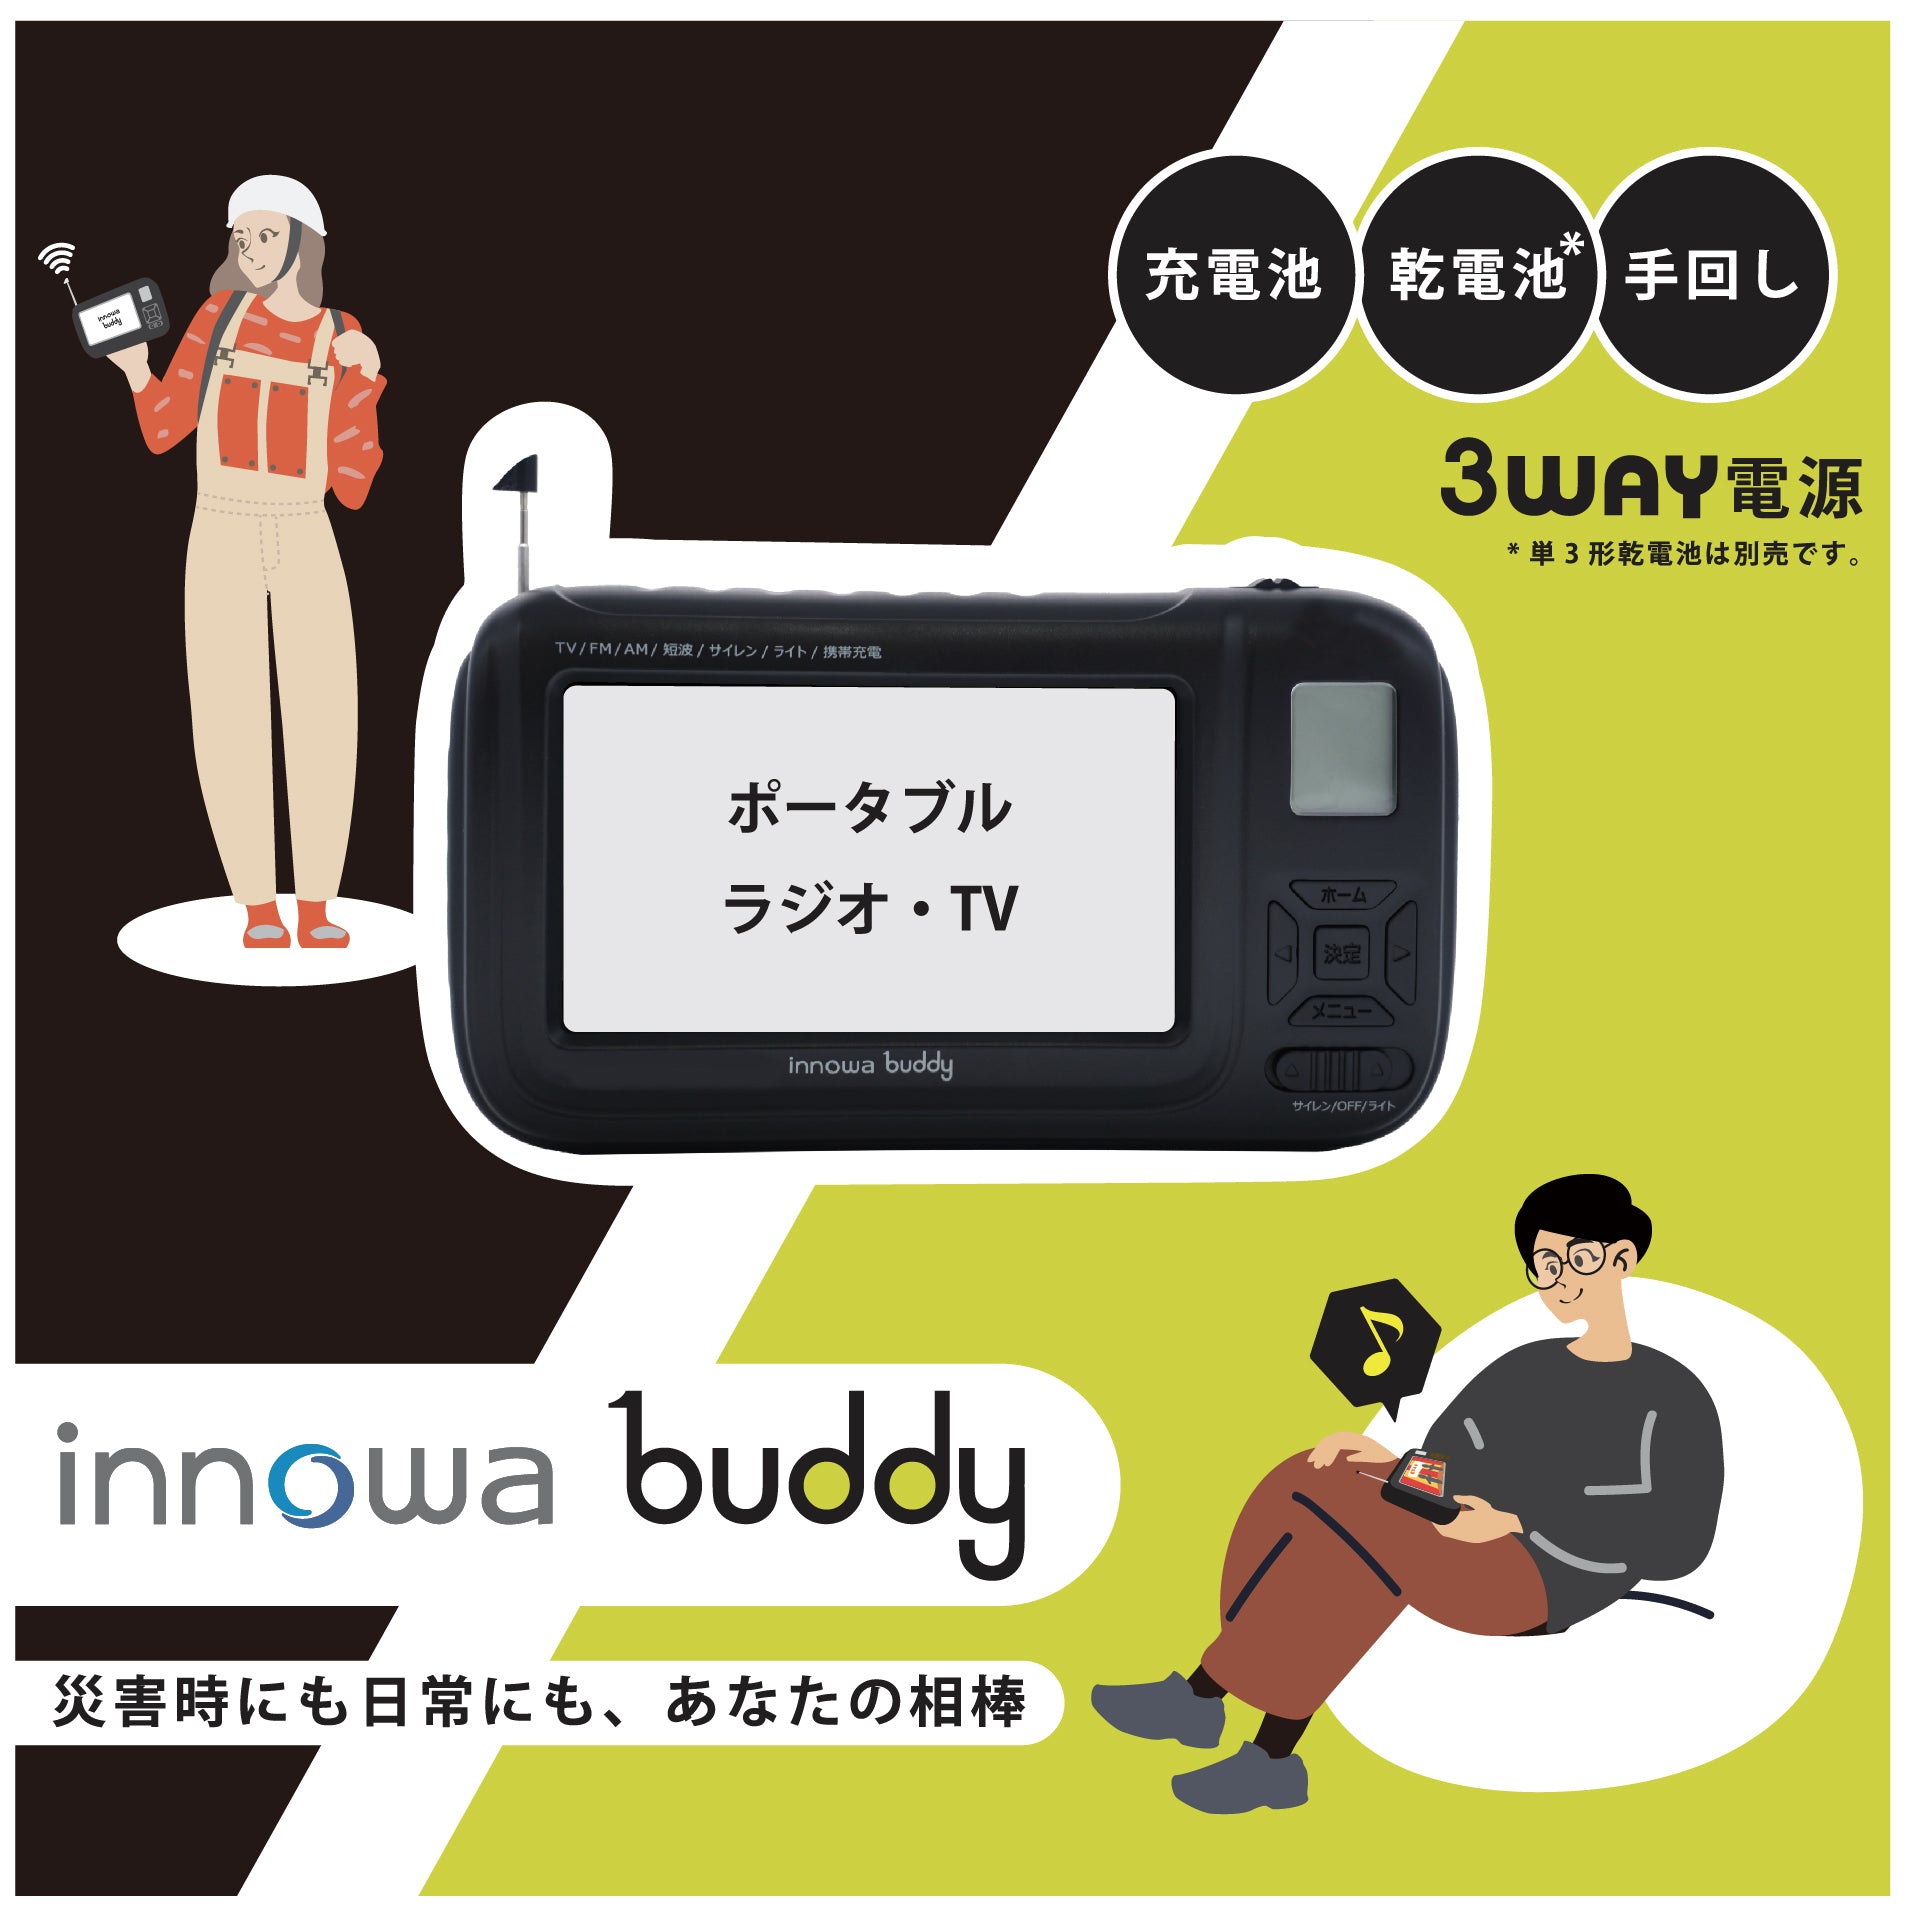 innowa buddy (Black) 手回し ポータブルテレビ・ラジオ 3WAY電源 LED